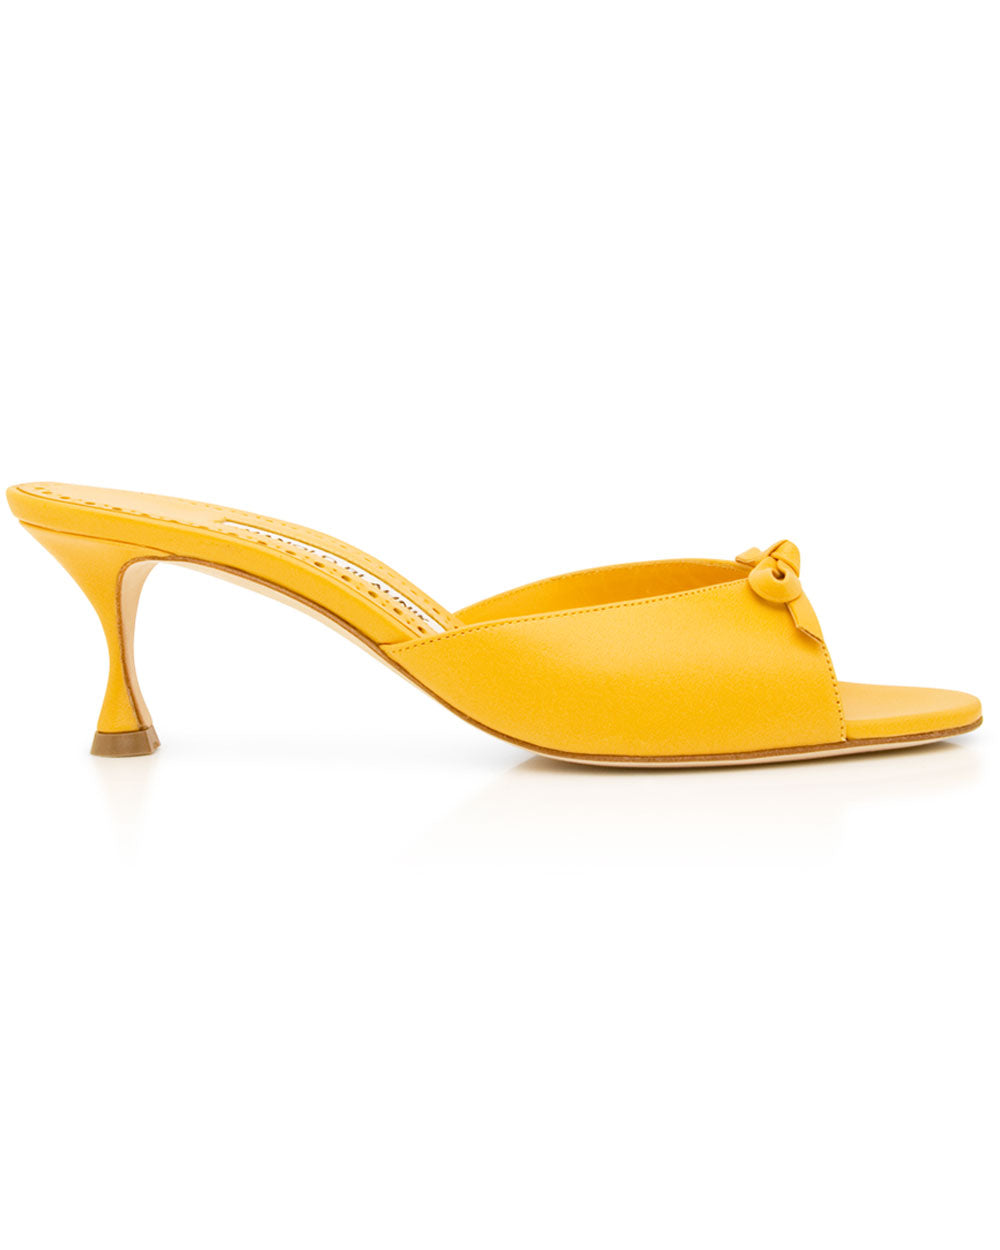 Pertinanu Sandal in Deep Yellow